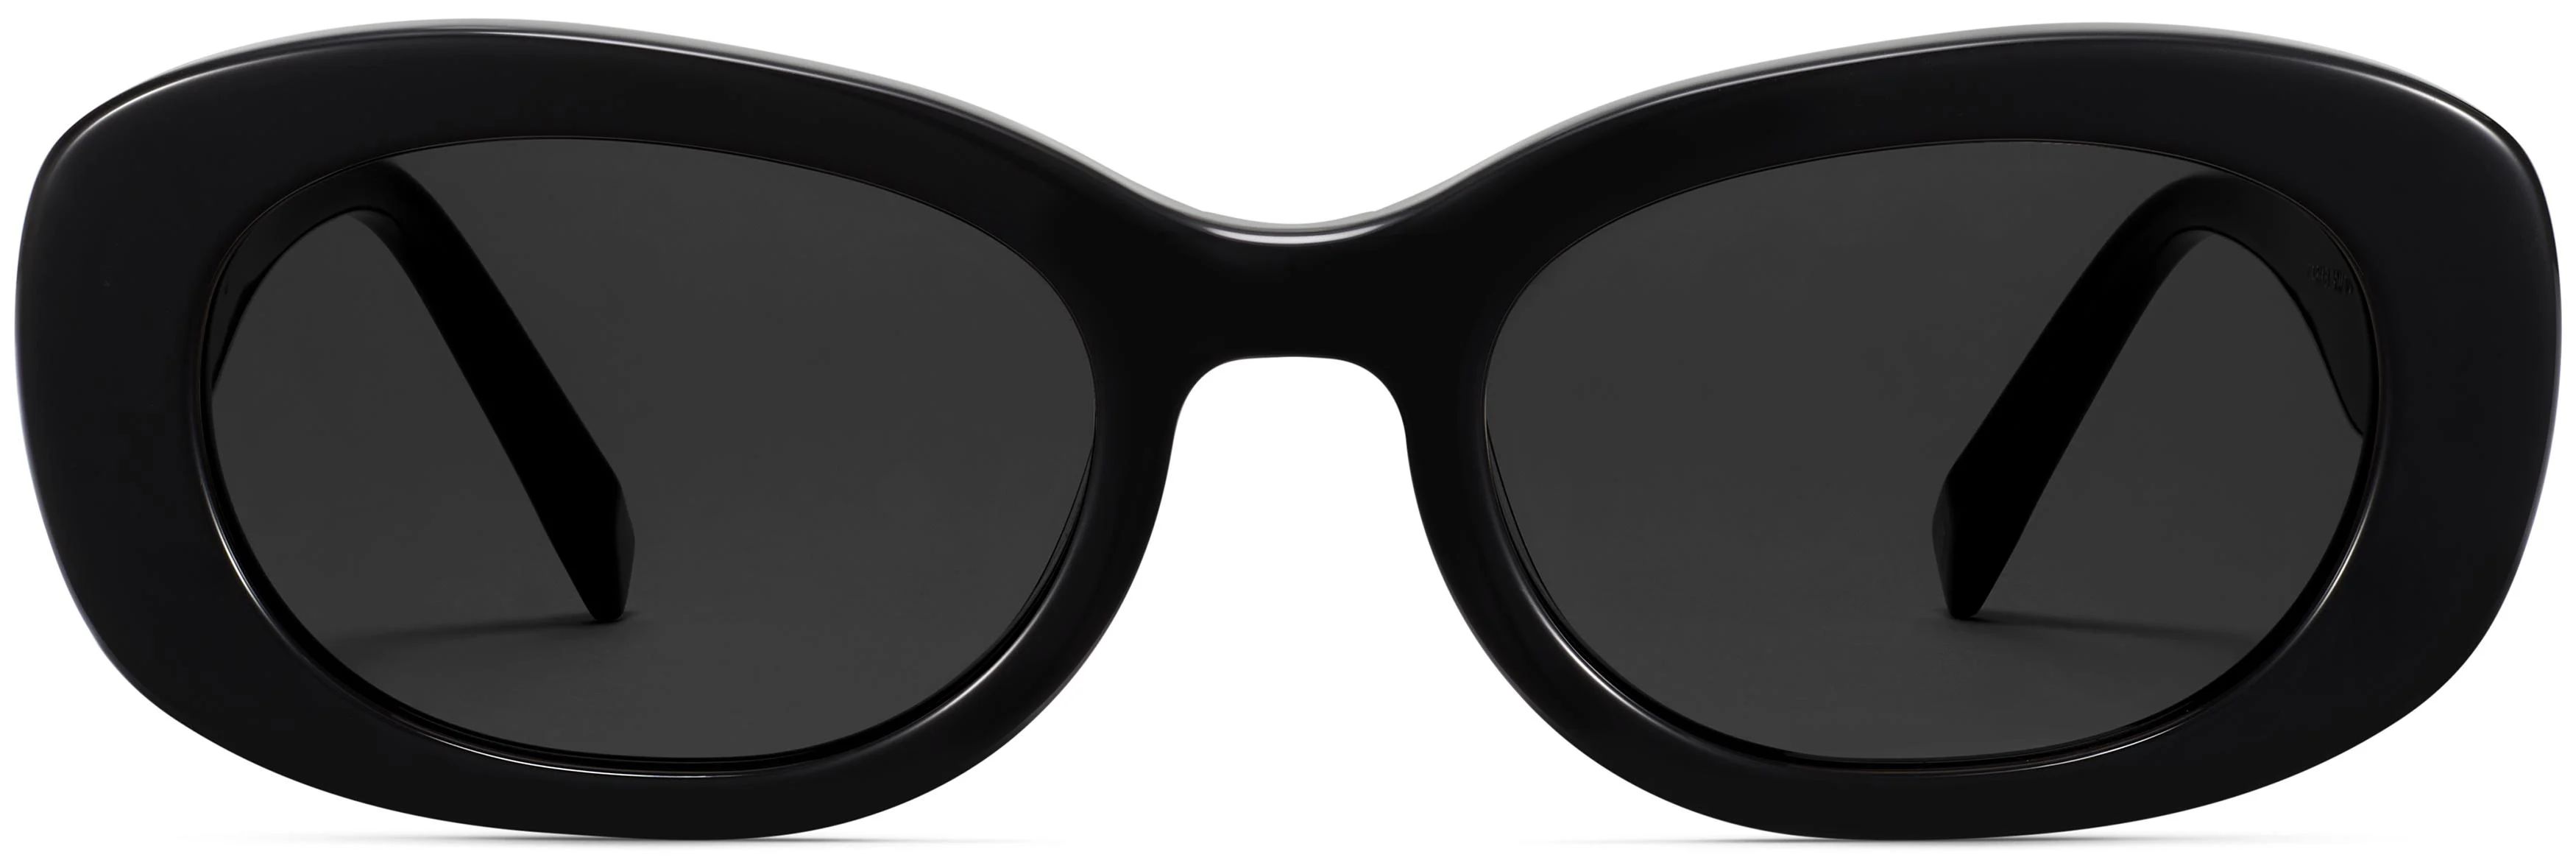 Carmel Sunglasses in Jet Black | Warby Parker | Warby Parker (US)